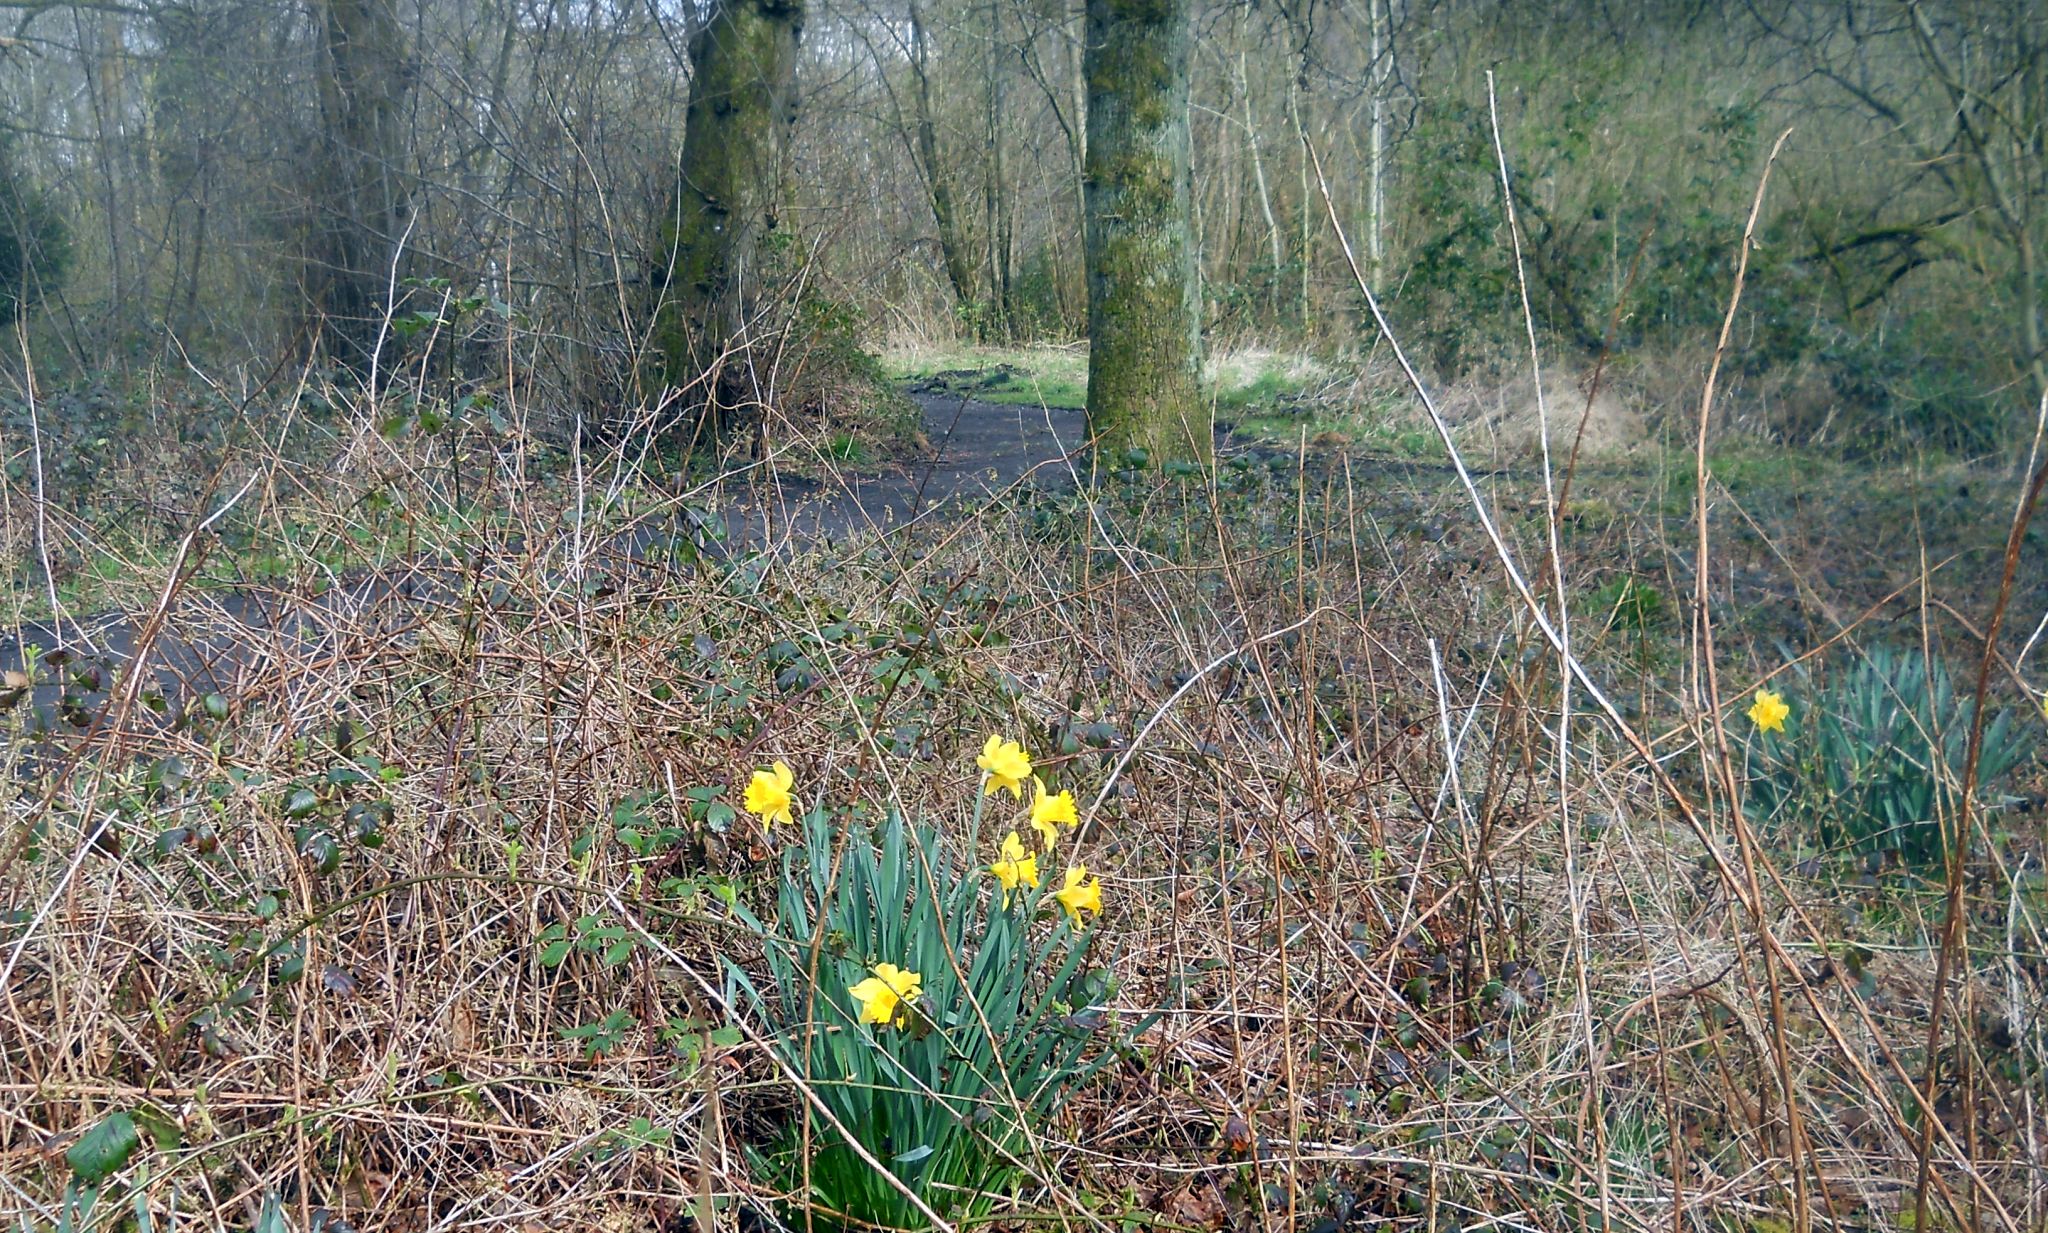 Daffodils at Kilmardinny Loch in Bearsden